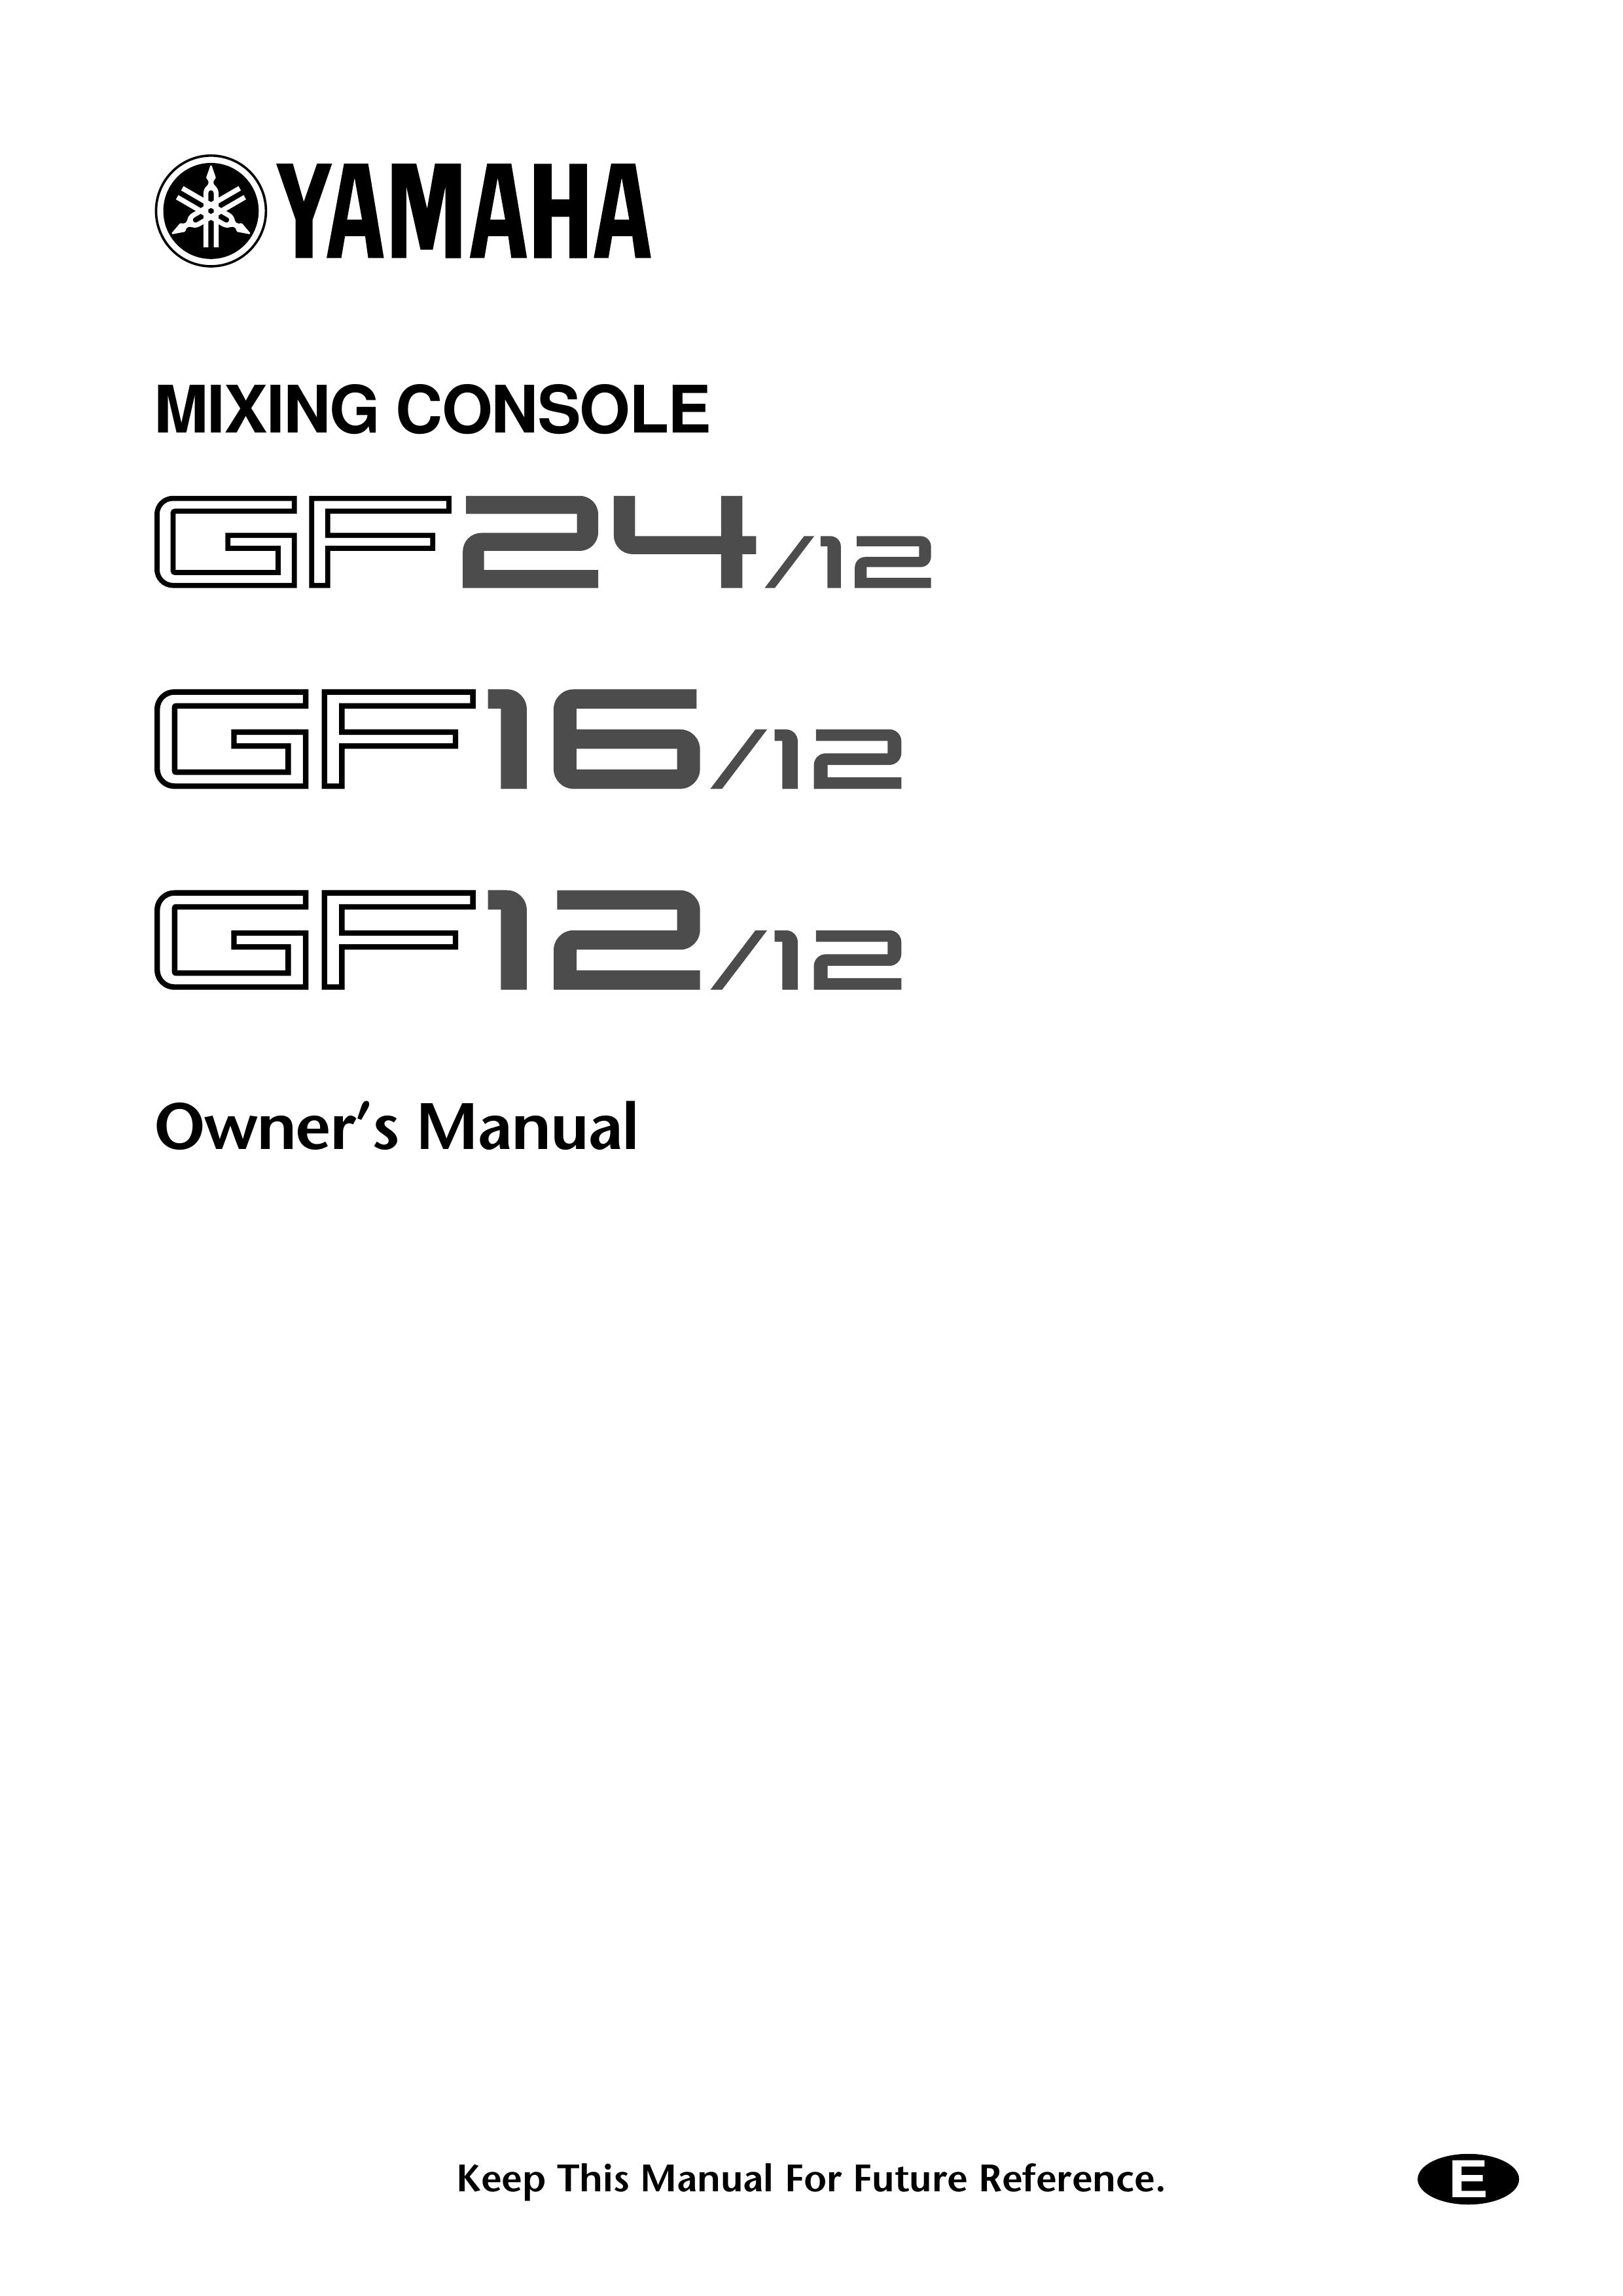 Yamaha GF24/12 DJ Equipment User Manual